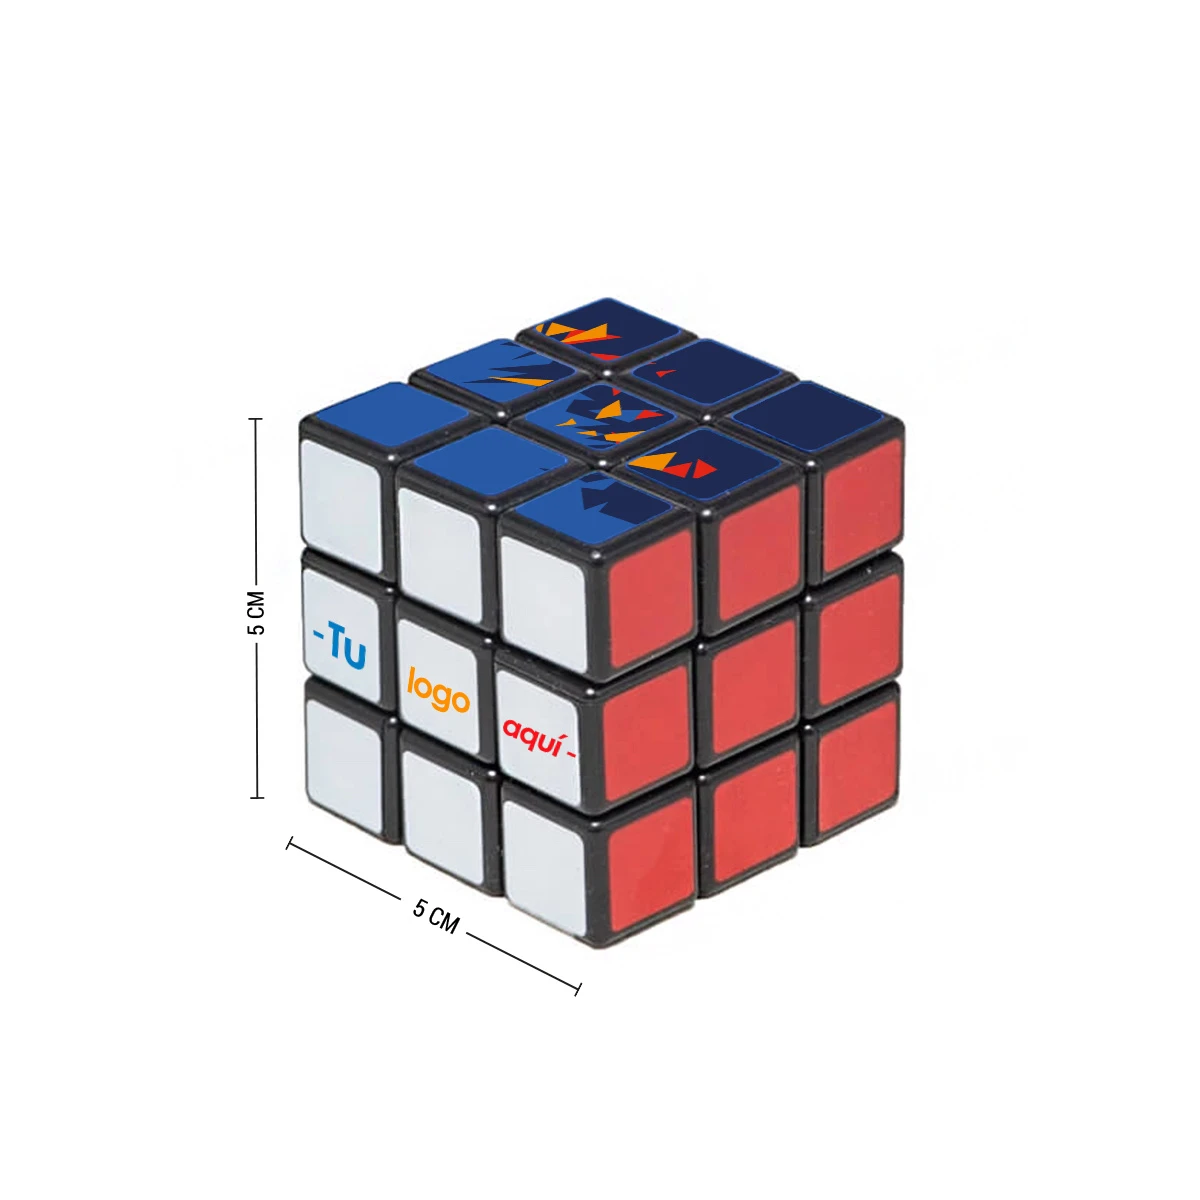 JGVJ0002-Cubo-Rubik-Profesional-medidas